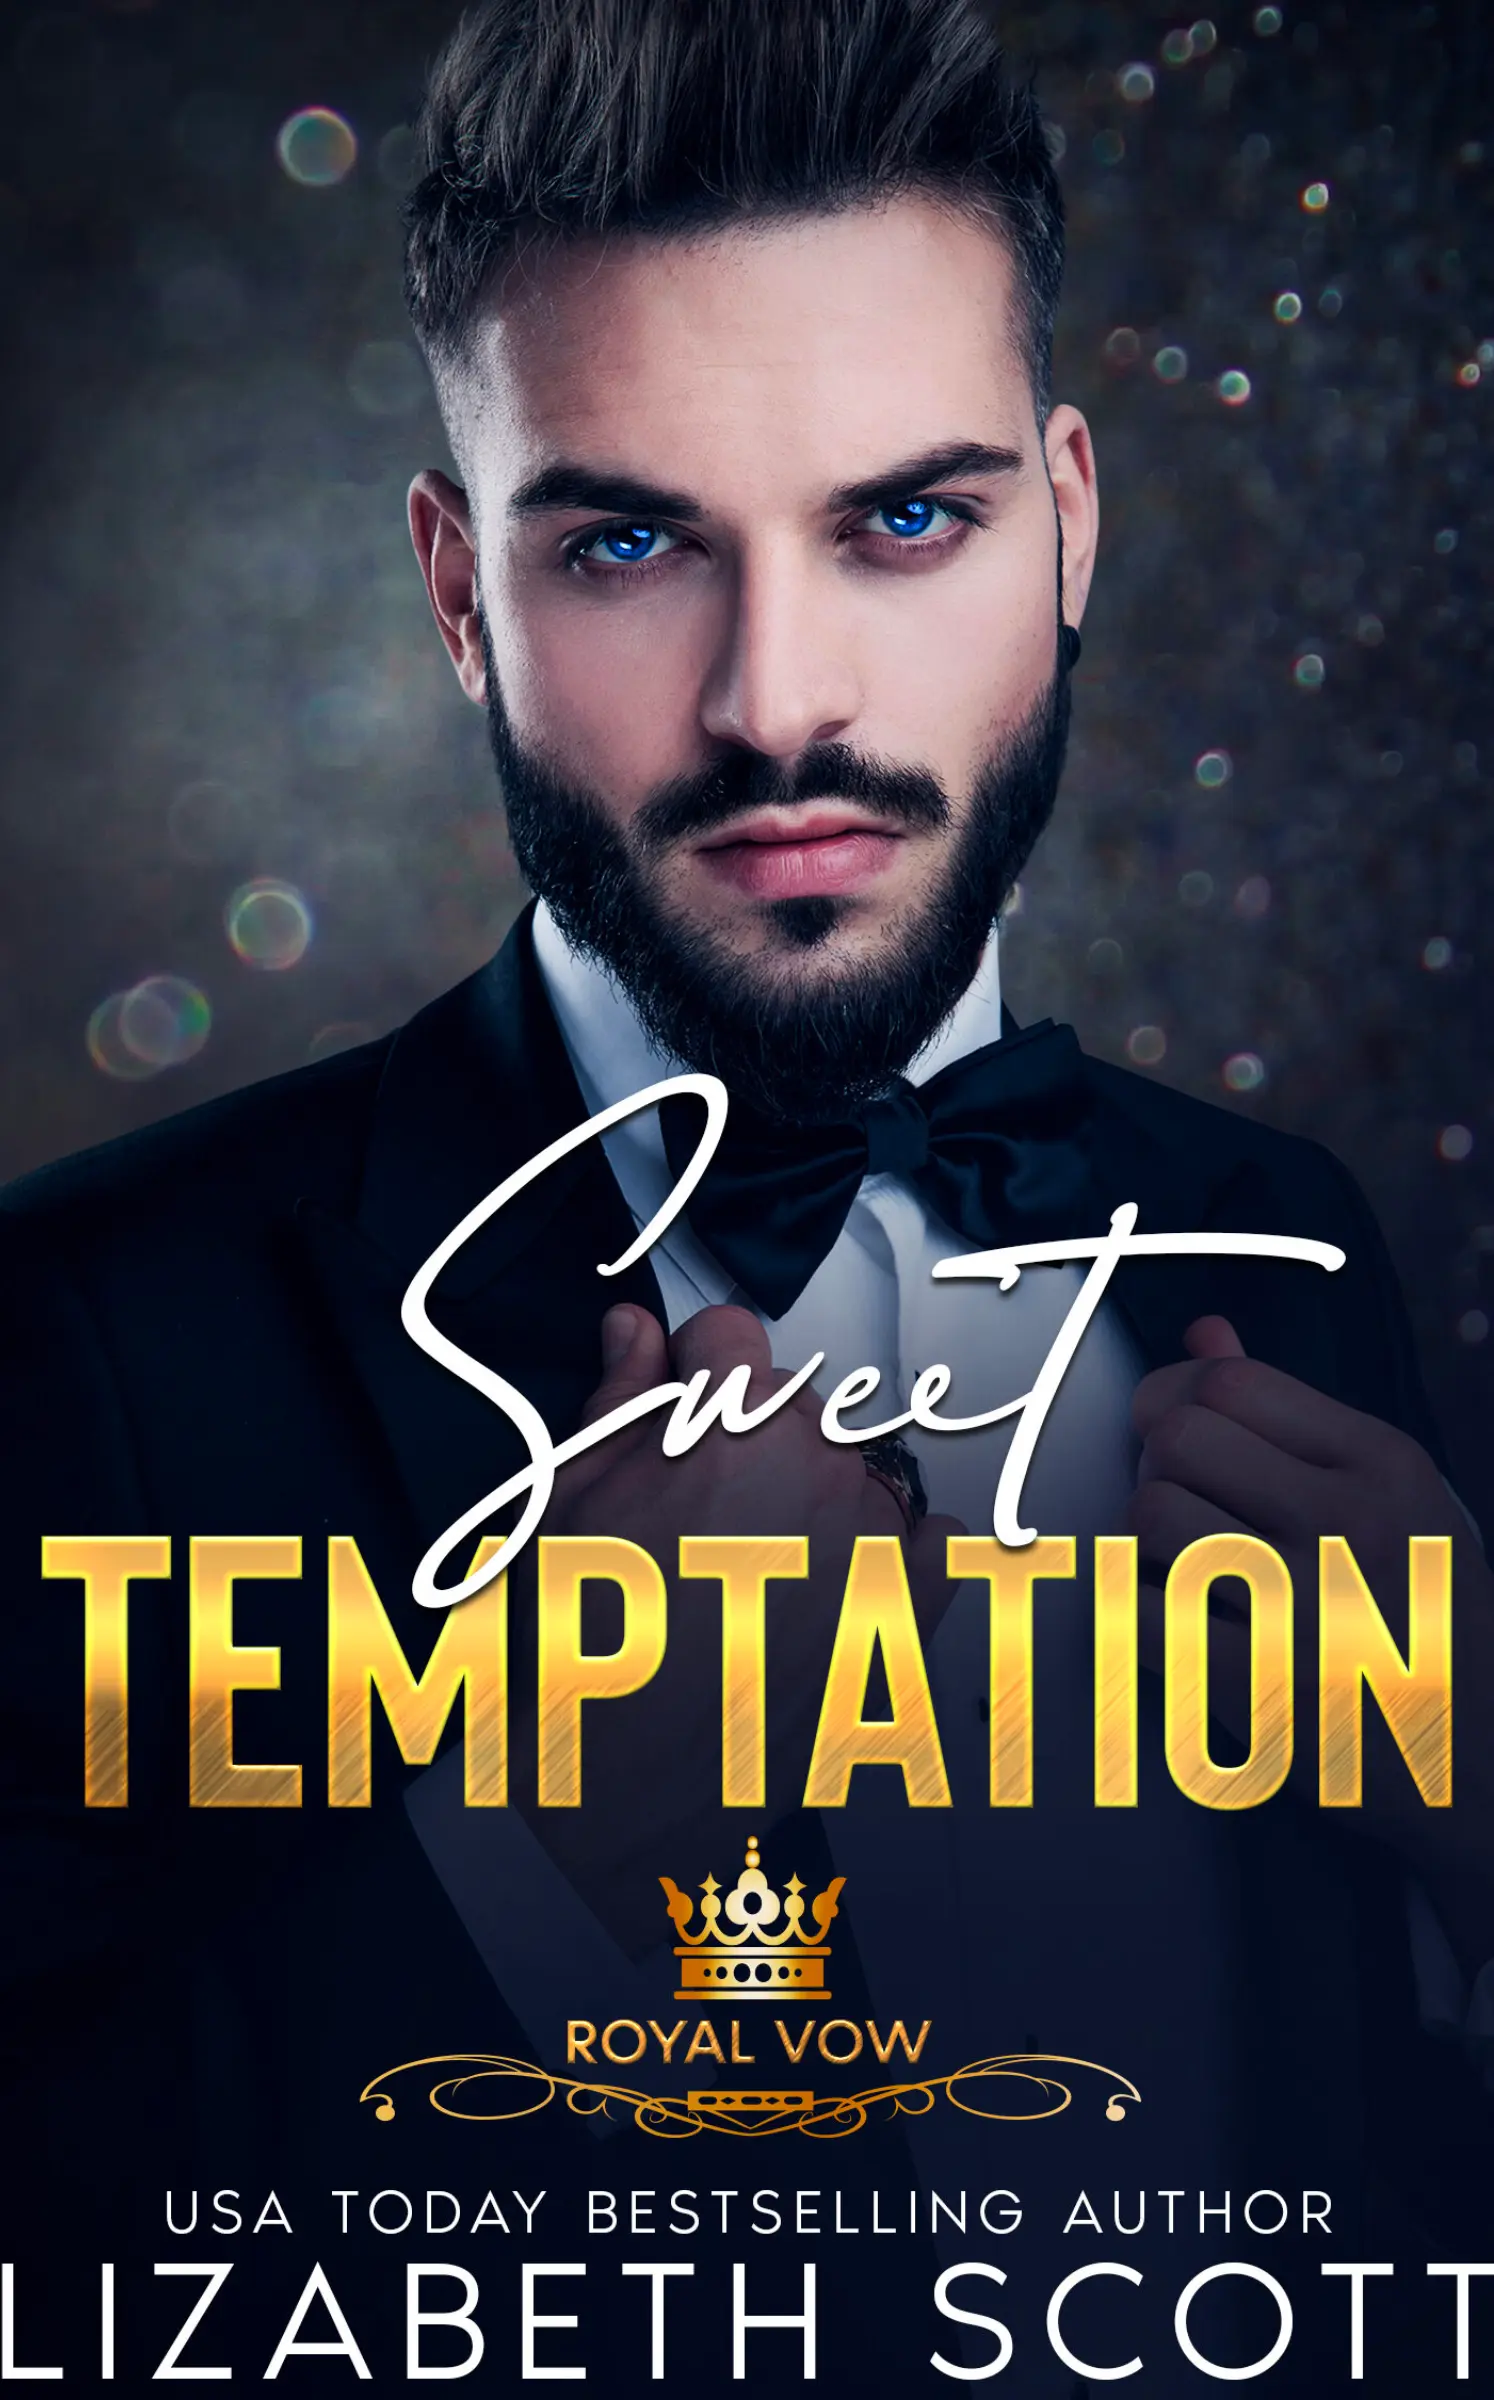 Sweet Temptation: The Royal Vow Series by Lizabeth Scott.